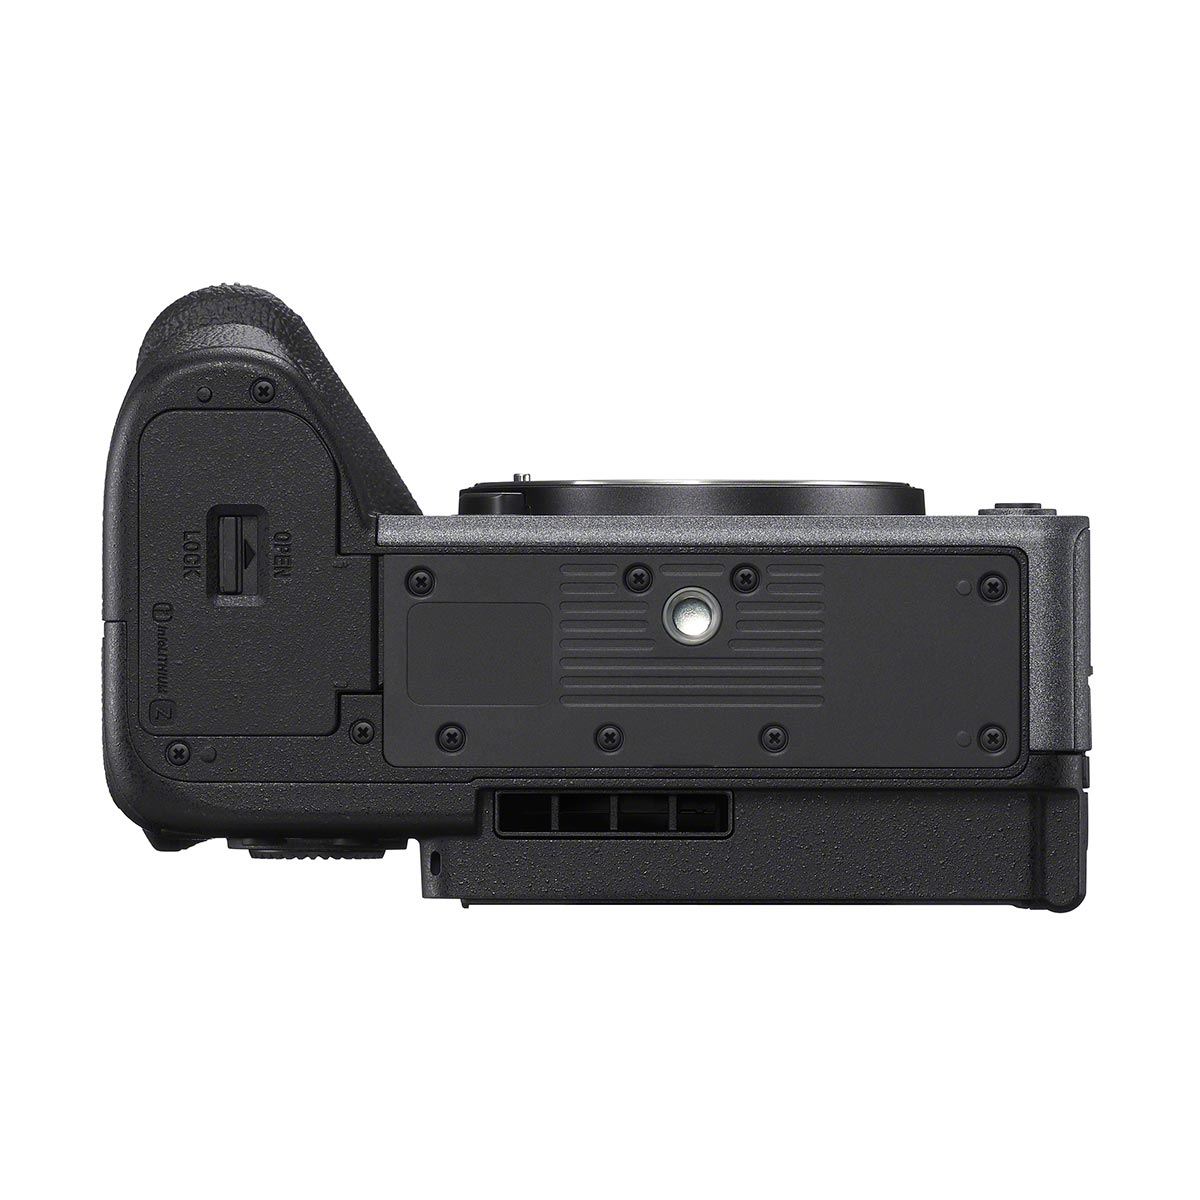 Sony FX30 Super 35 Cinema Camera with XLR Handle Unit *OPEN BOX*